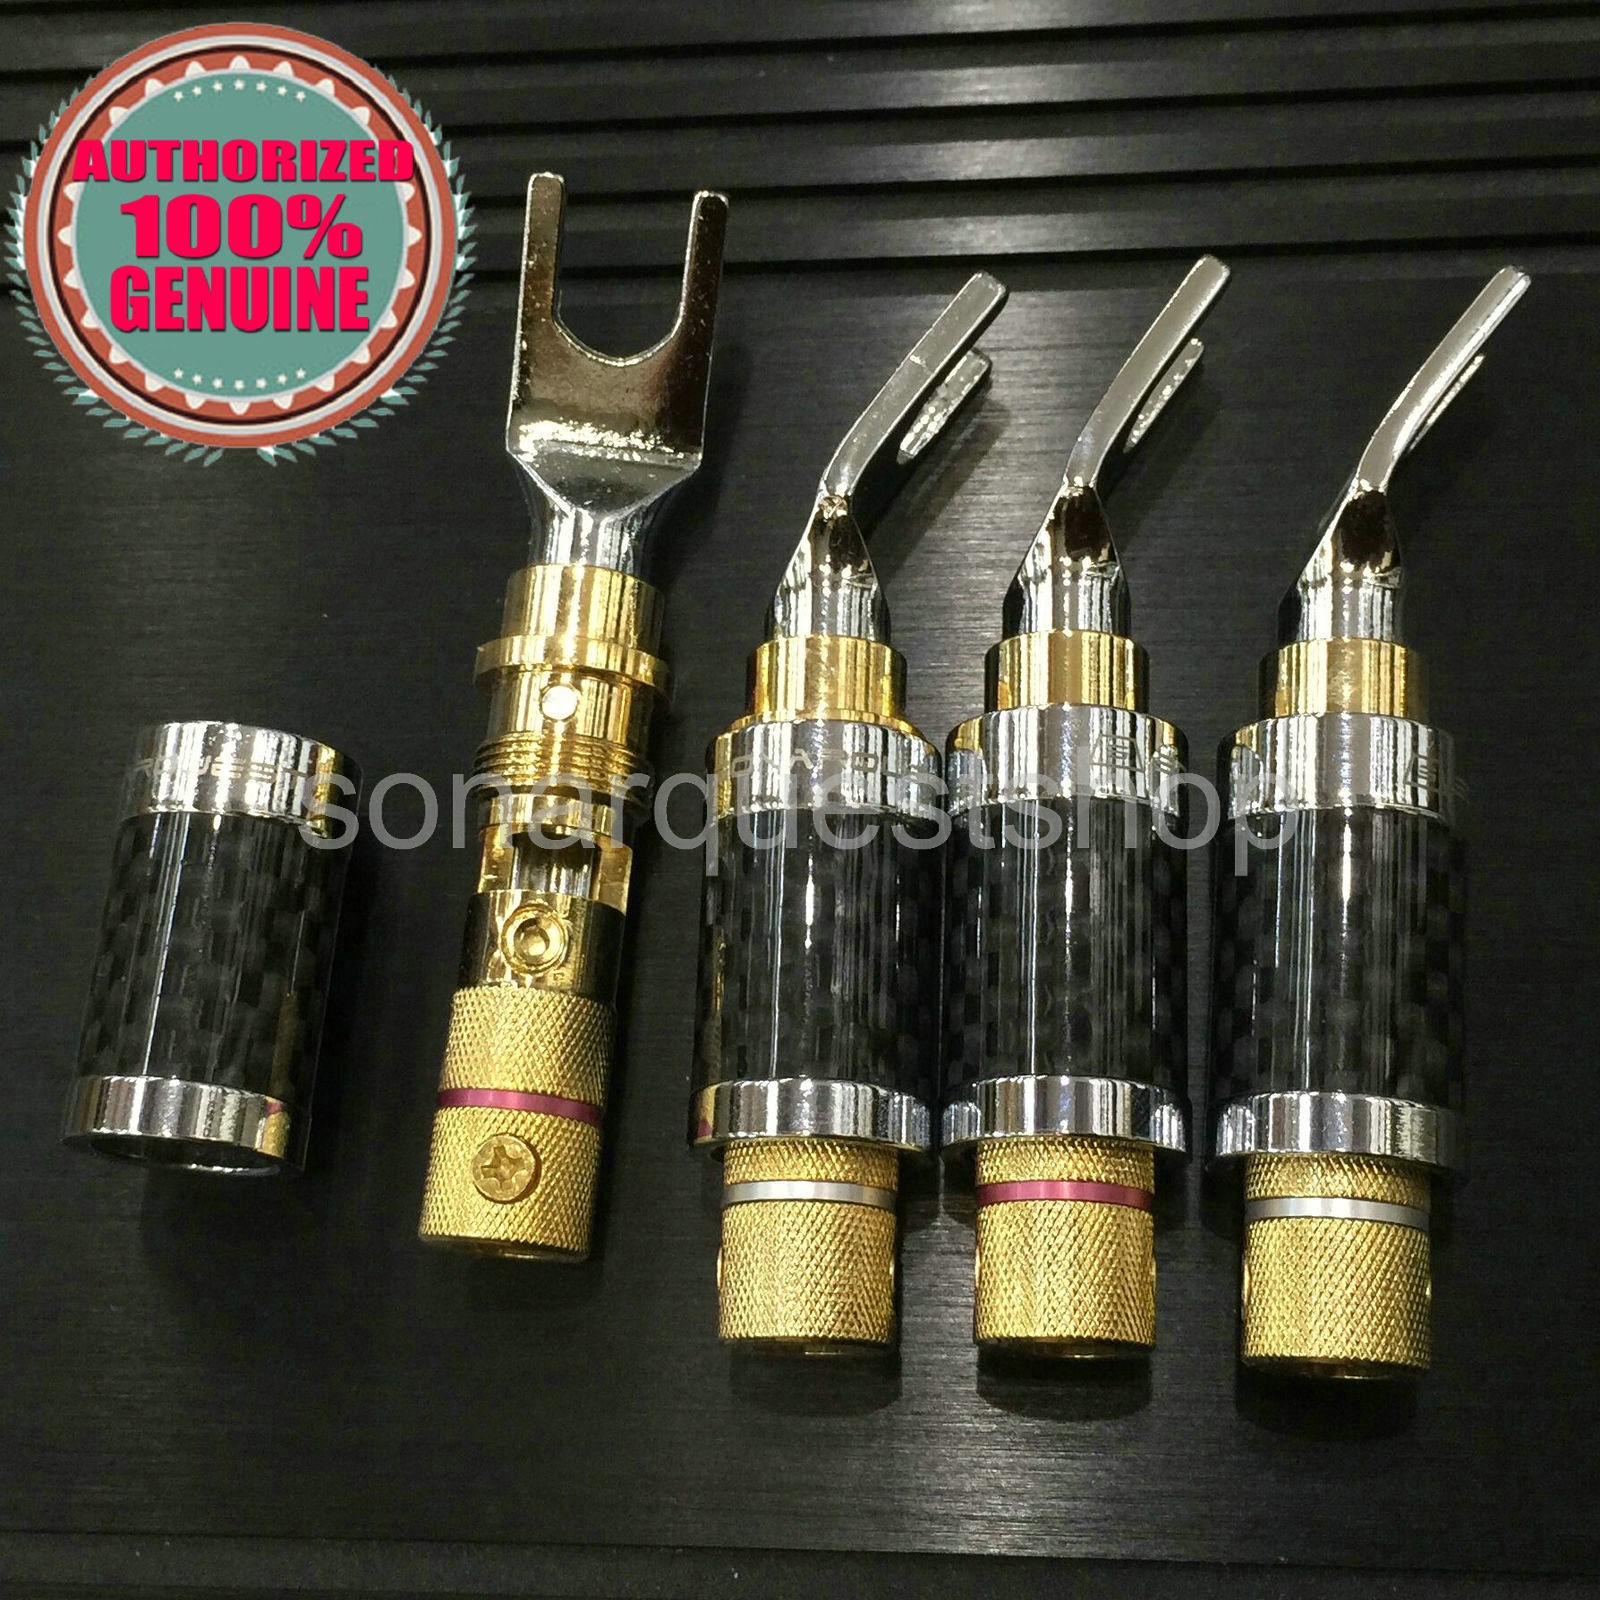 SONARQUEST CS-20 Carbon Fiber Rhodium + Gold Plated Y Spade plug Connector x 4 Pcs